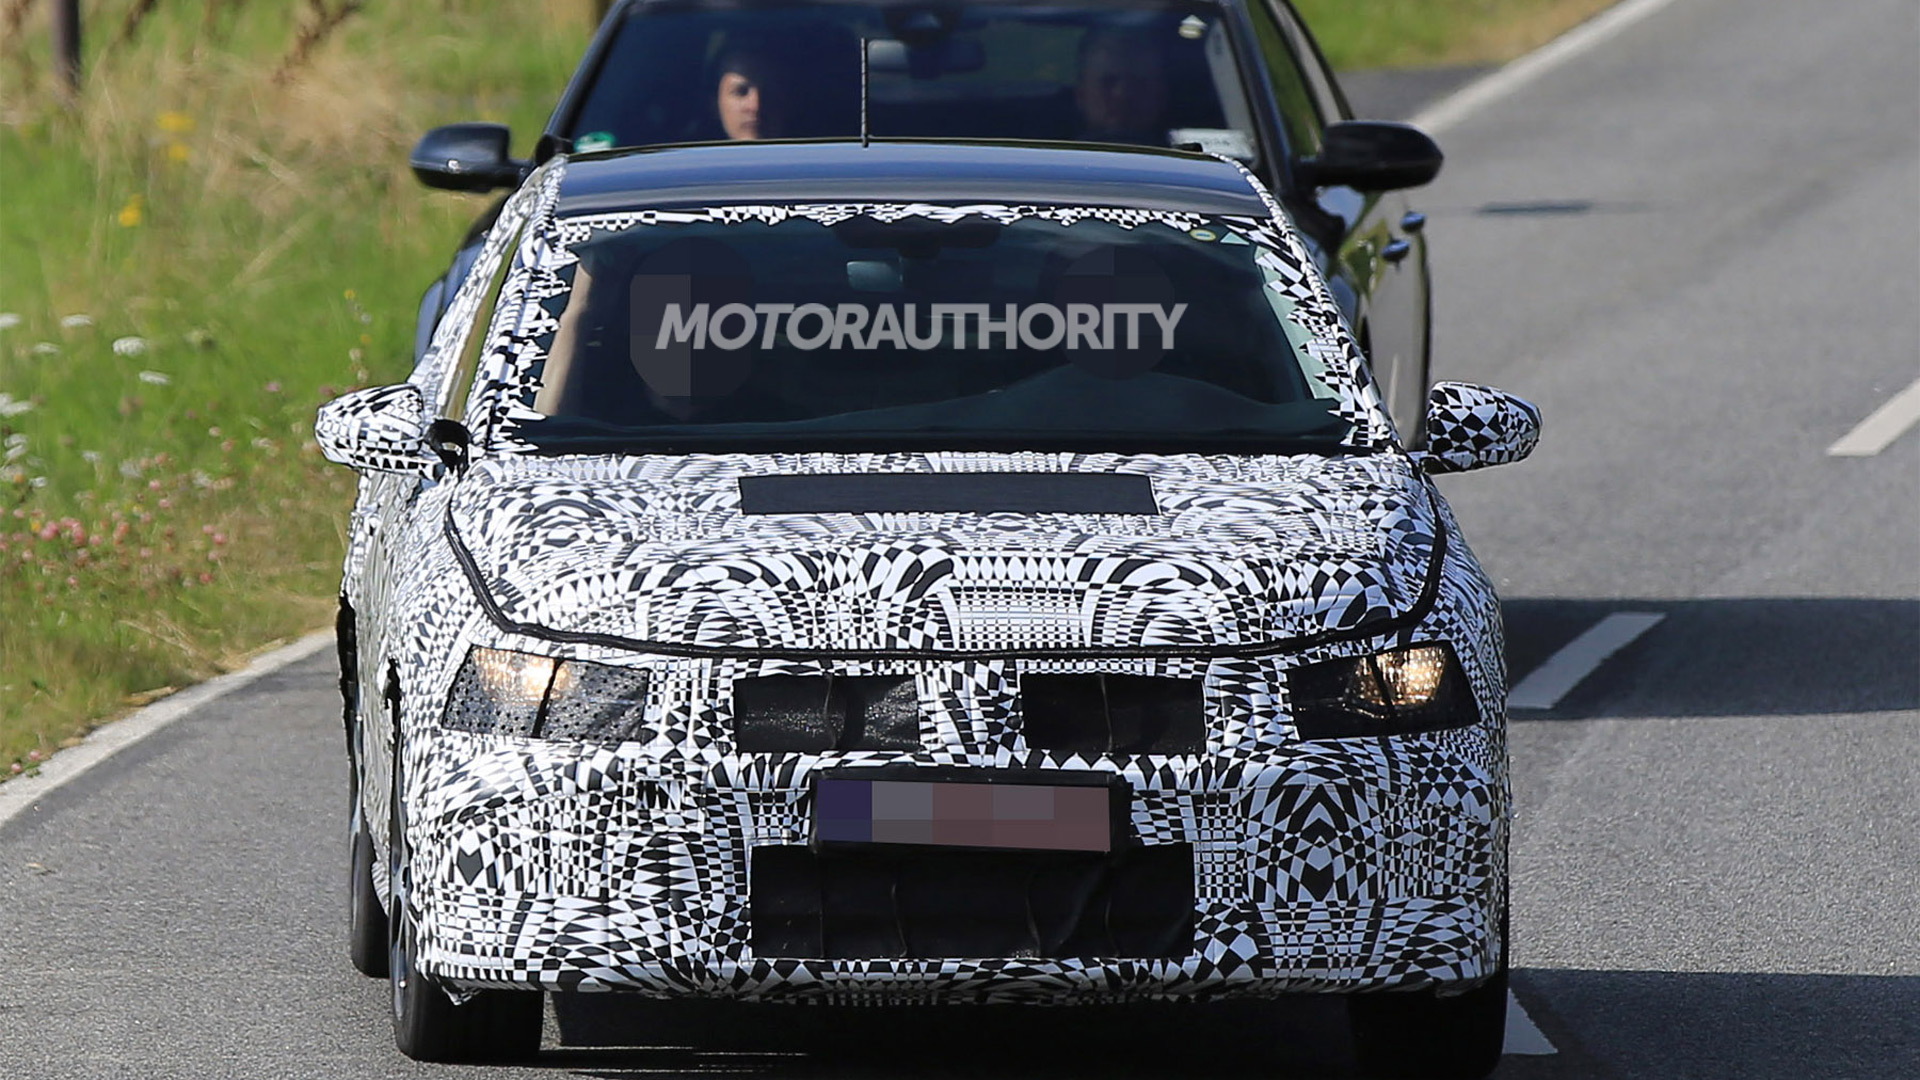 2018 Volkswagen Polo GTI spy shots - Image via S. Baldauf/SB-Medien